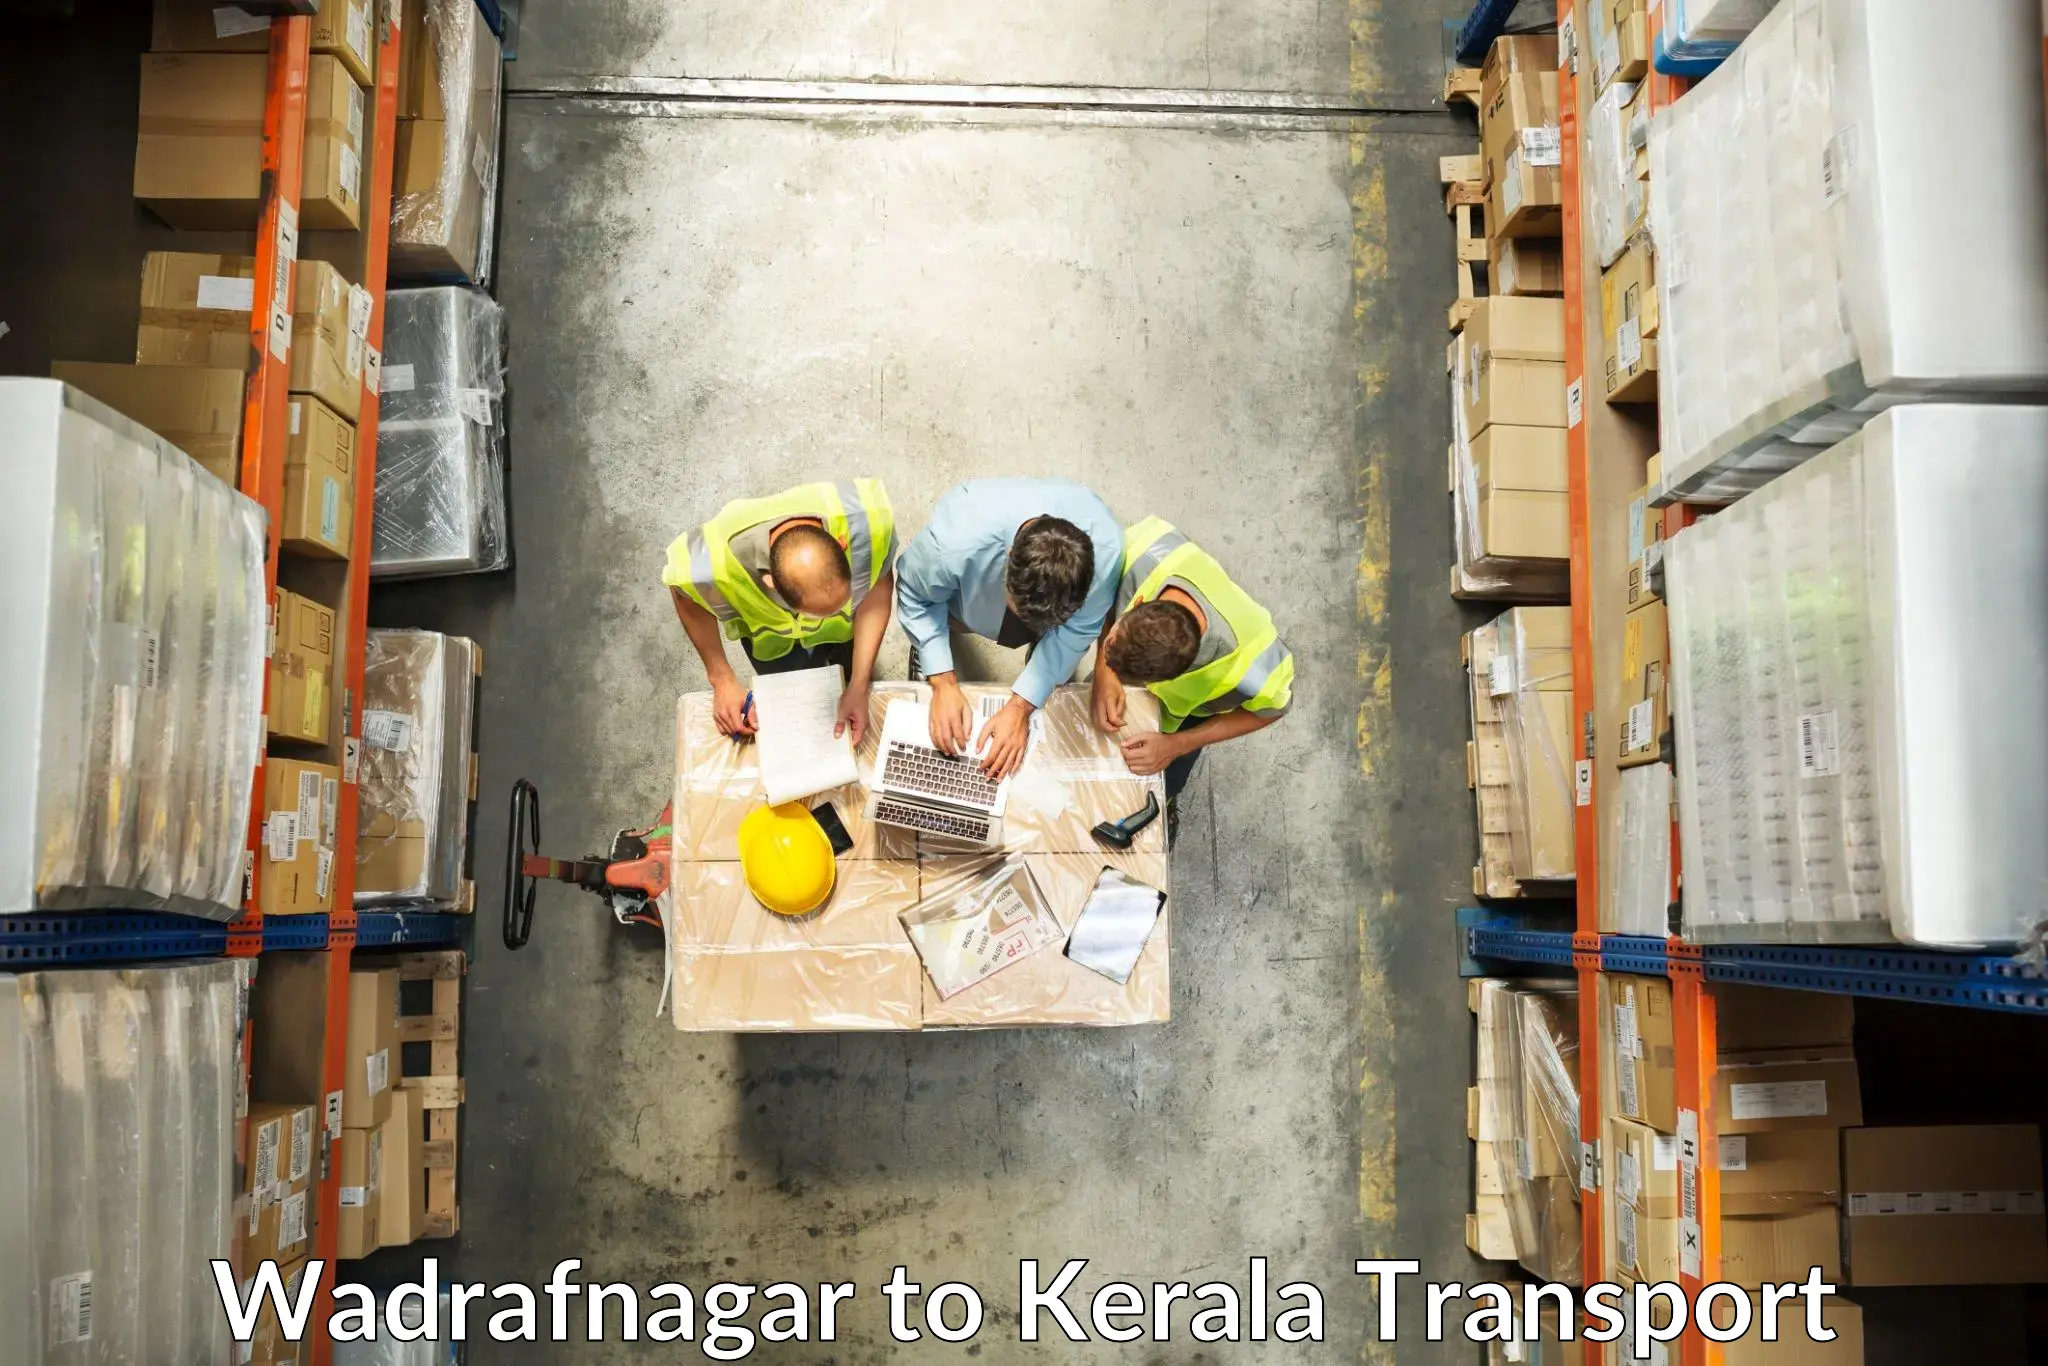 Lorry transport service Wadrafnagar to Thodupuzha